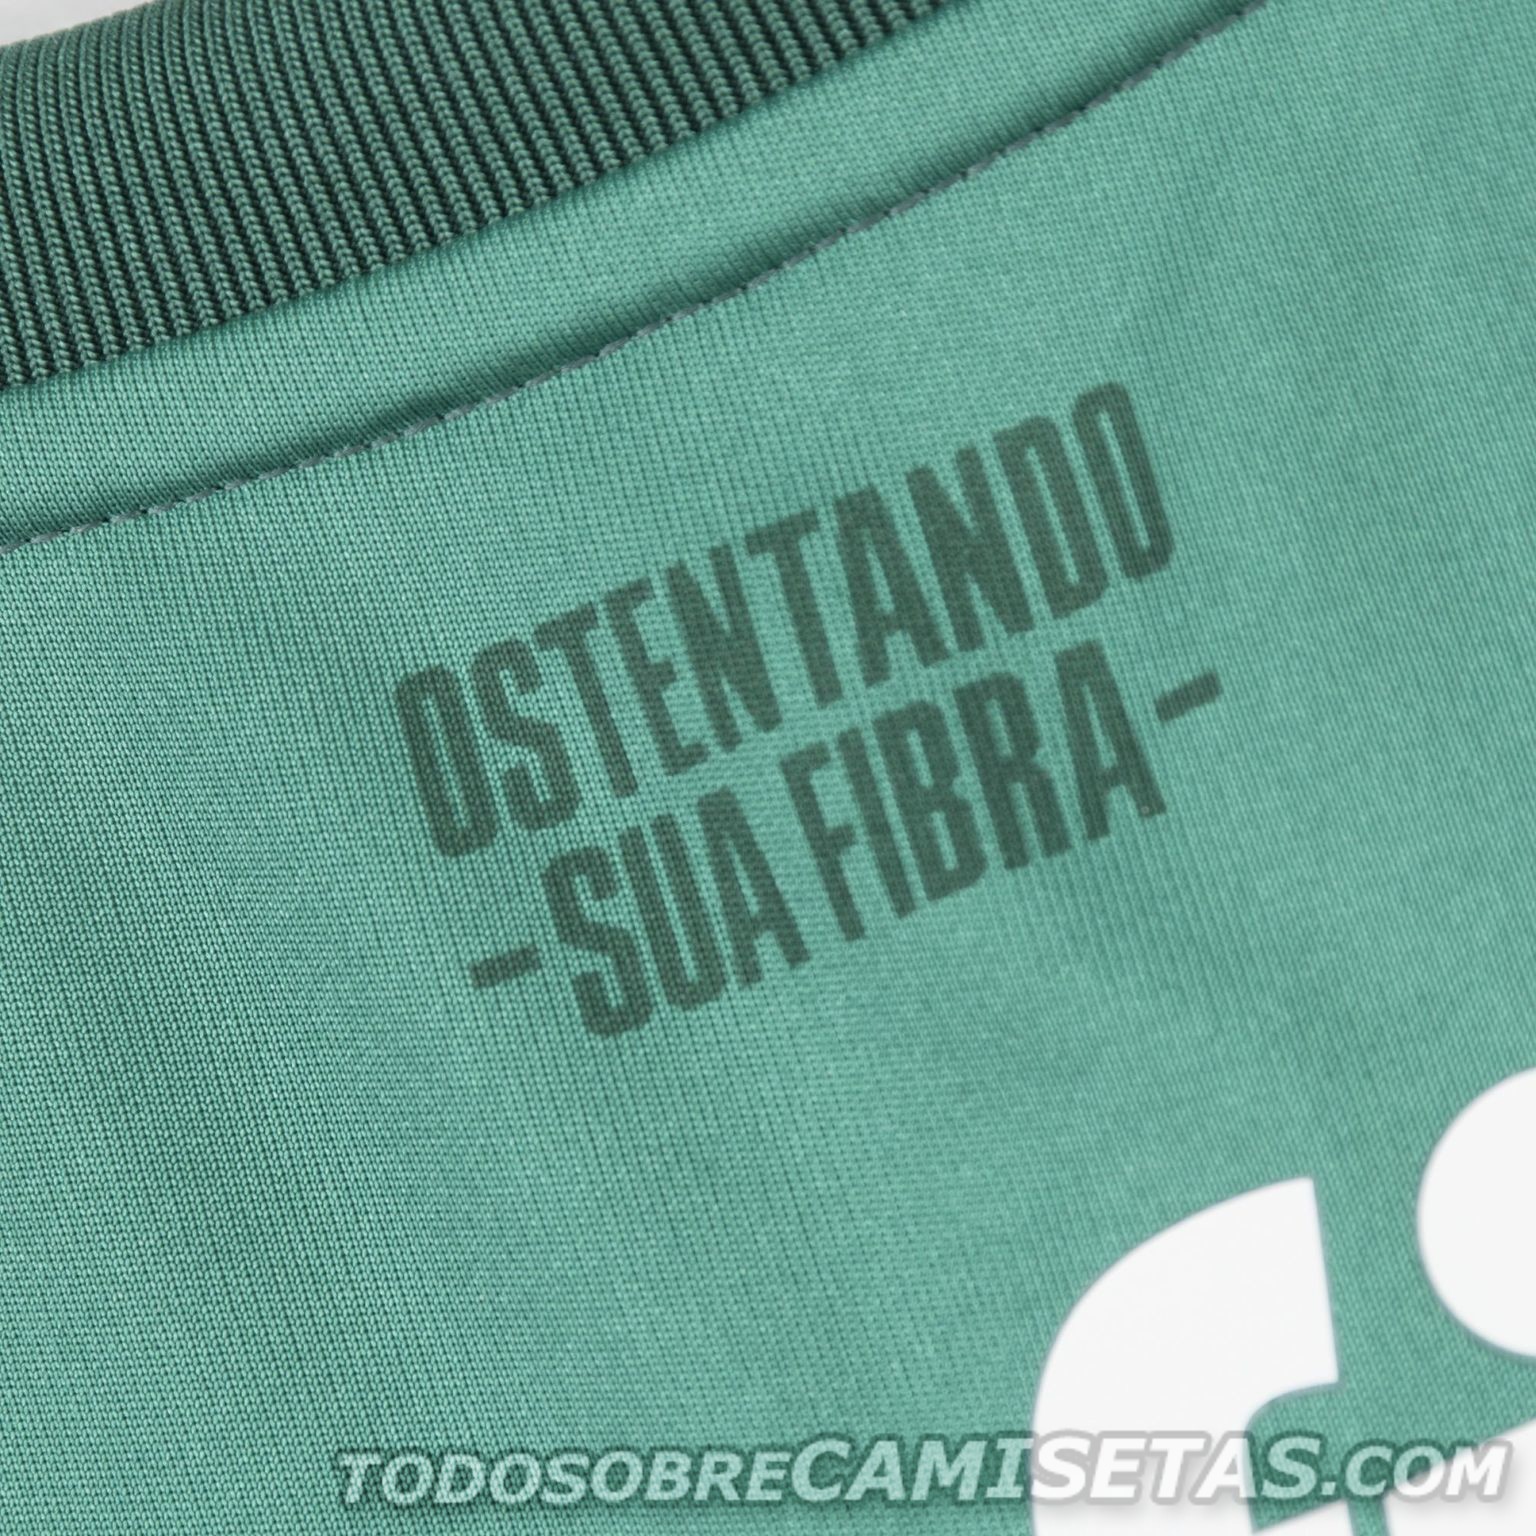 Camiseta adidas de Palmeiras 2017